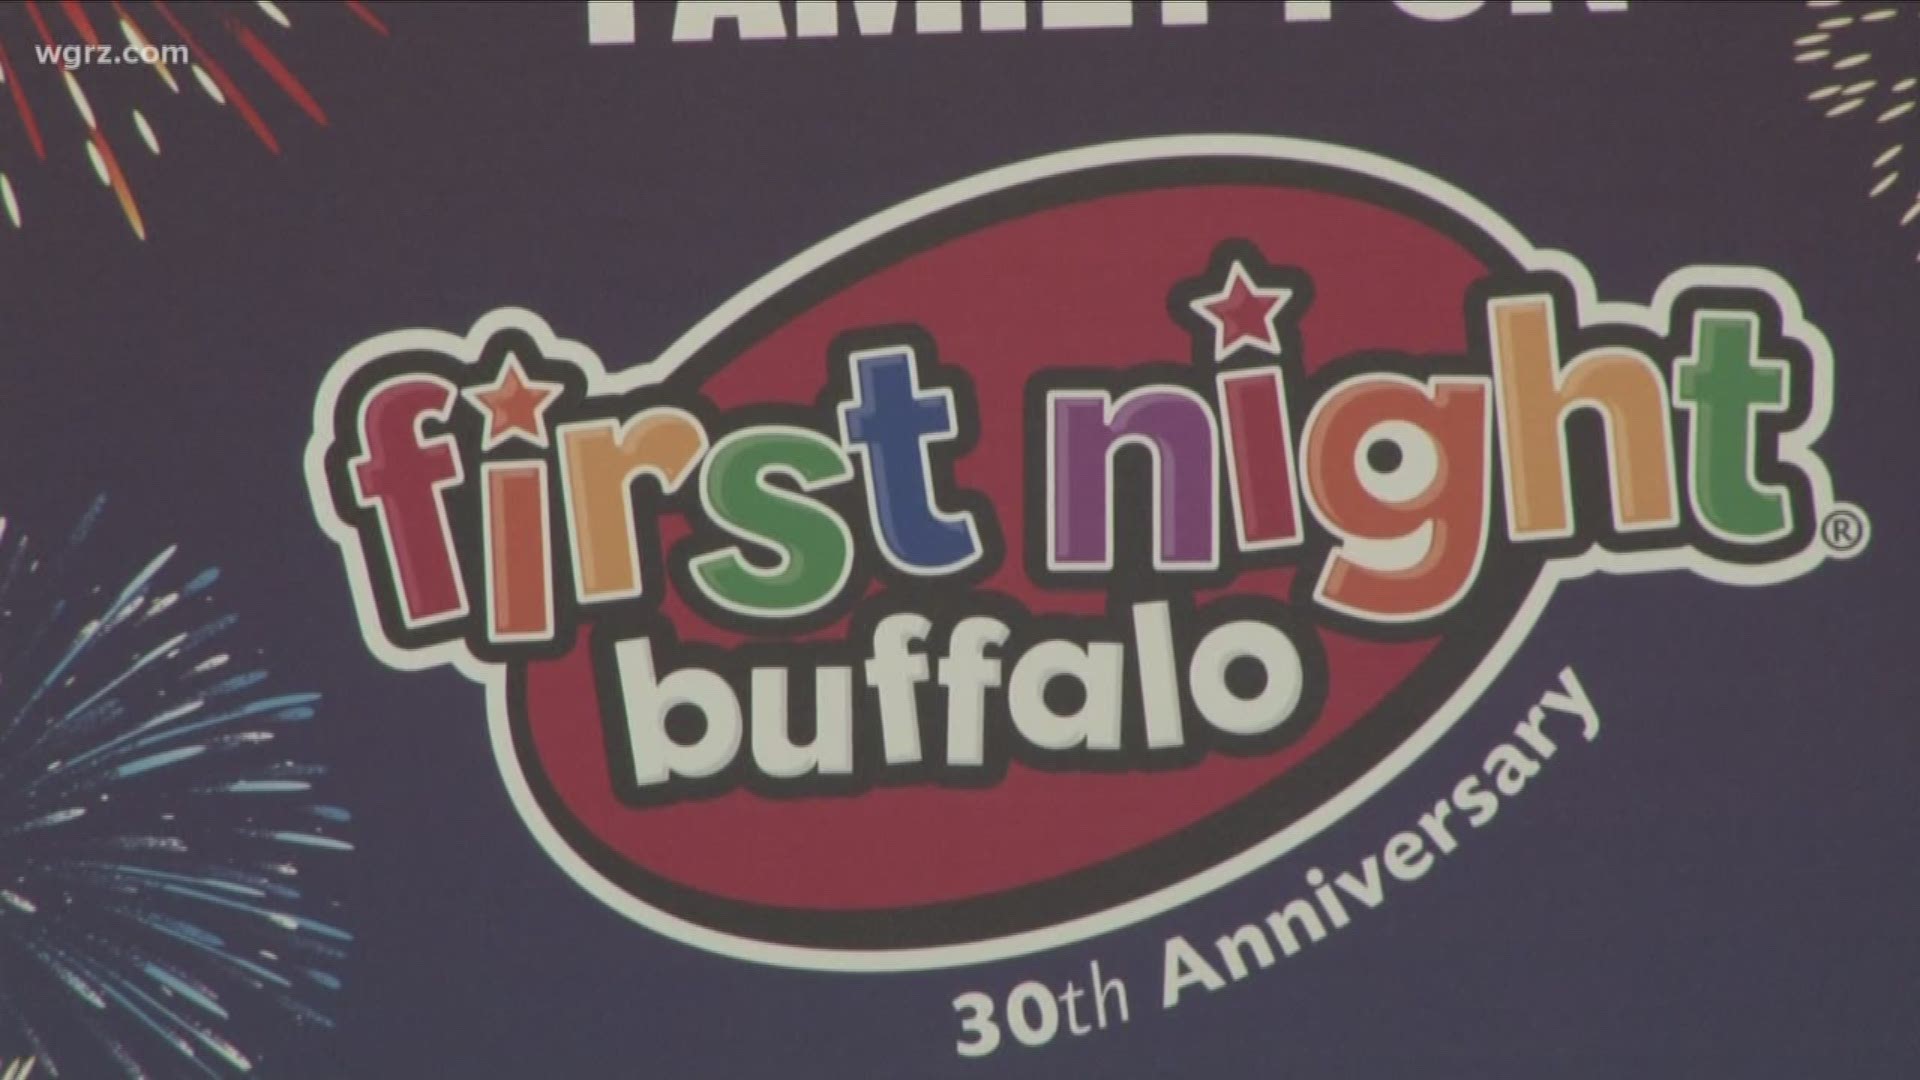 Multiplikation gavnlig olie Plans unveiled for 30th "First Night Buffalo" | wgrz.com